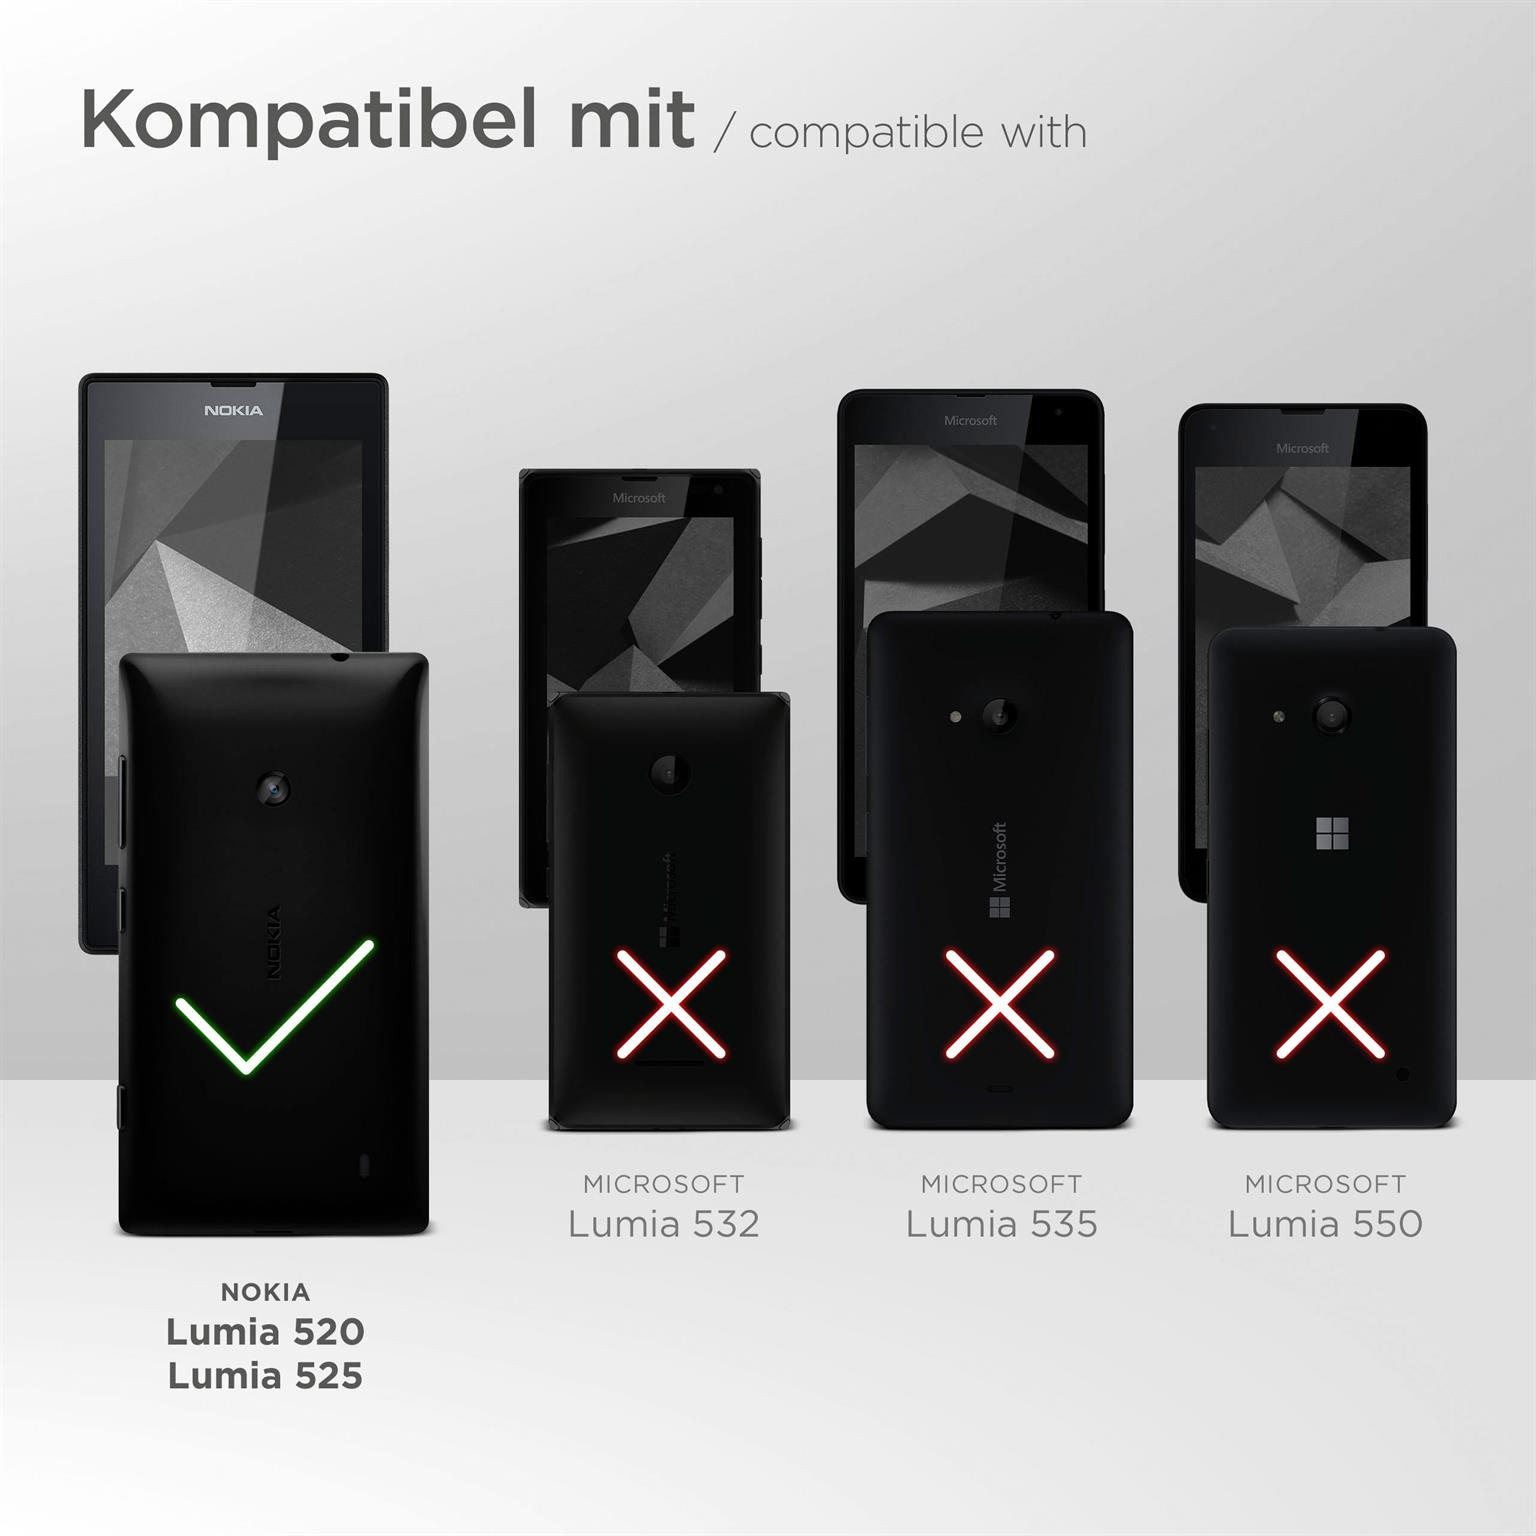 Flip 525, Nokia, MOEX Case, Emerald-Green Cover, Lumia Flip